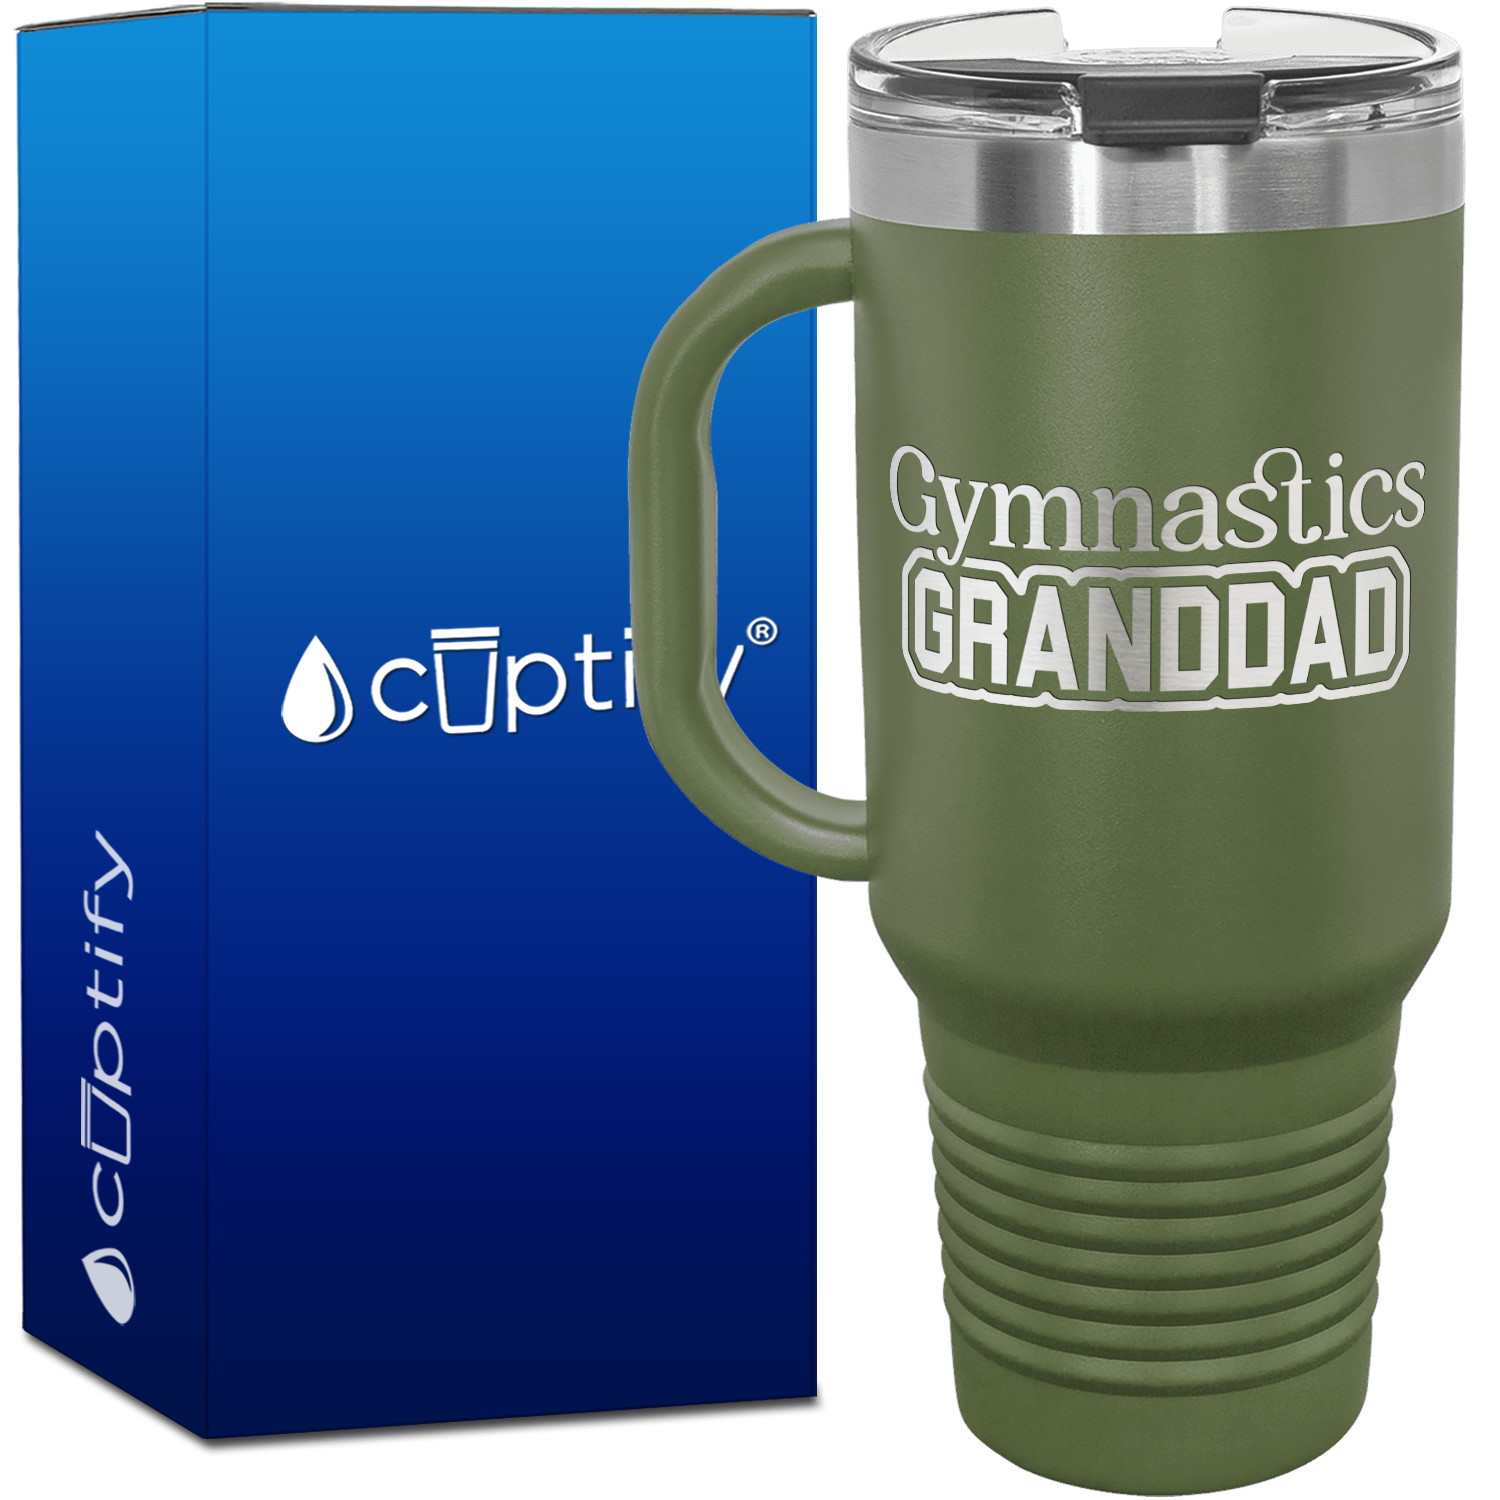 Gymnastics Granddad 40oz Gymnastics Travel Mug